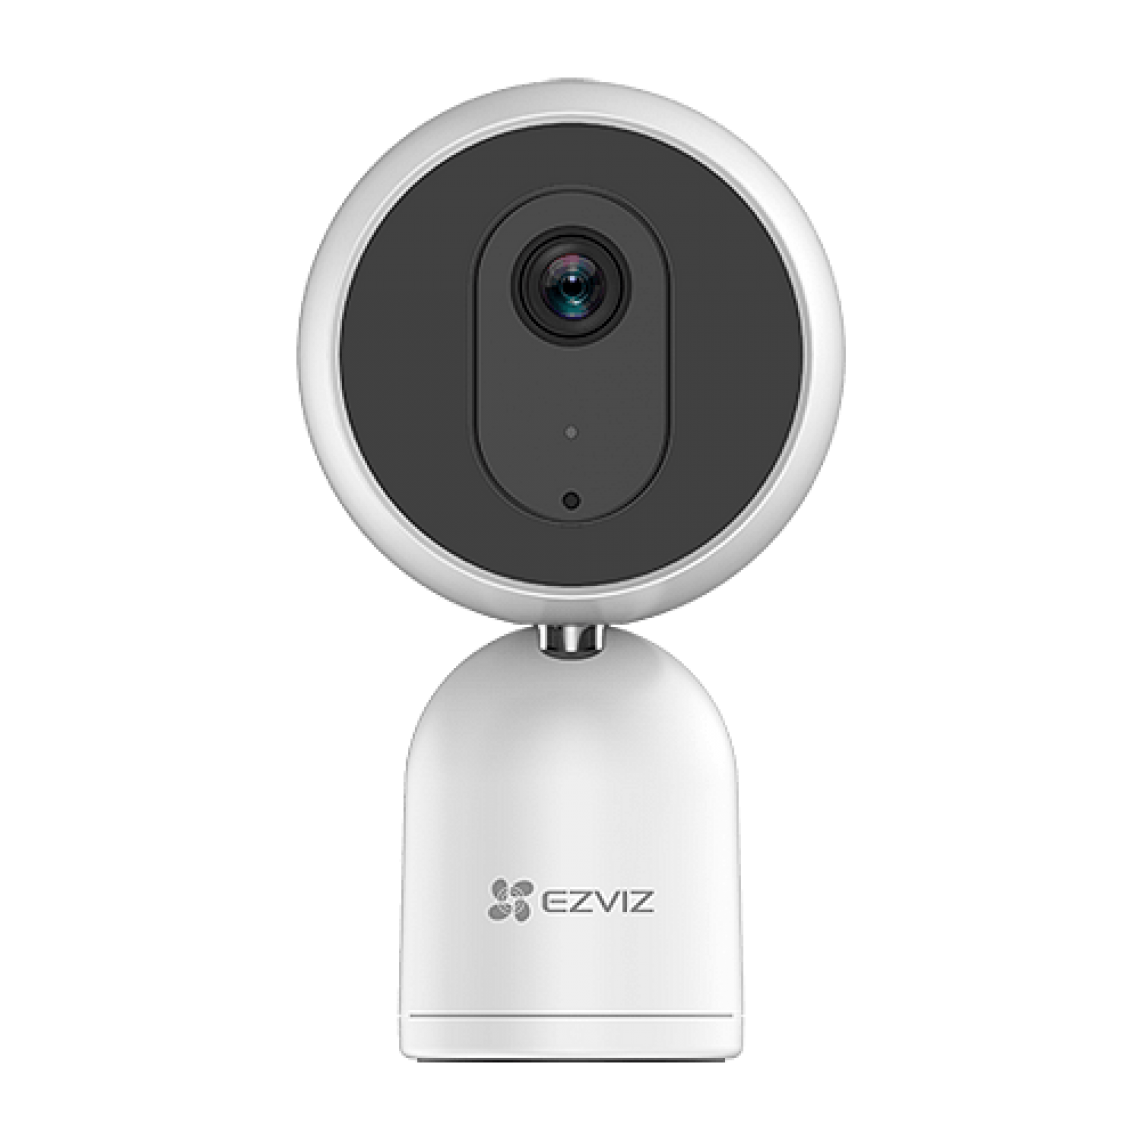 Ezviz - Caméra WiFi Full HD 1080p avec vision infrarouge 12 mètres - Ezviz - Caméra de surveillance connectée